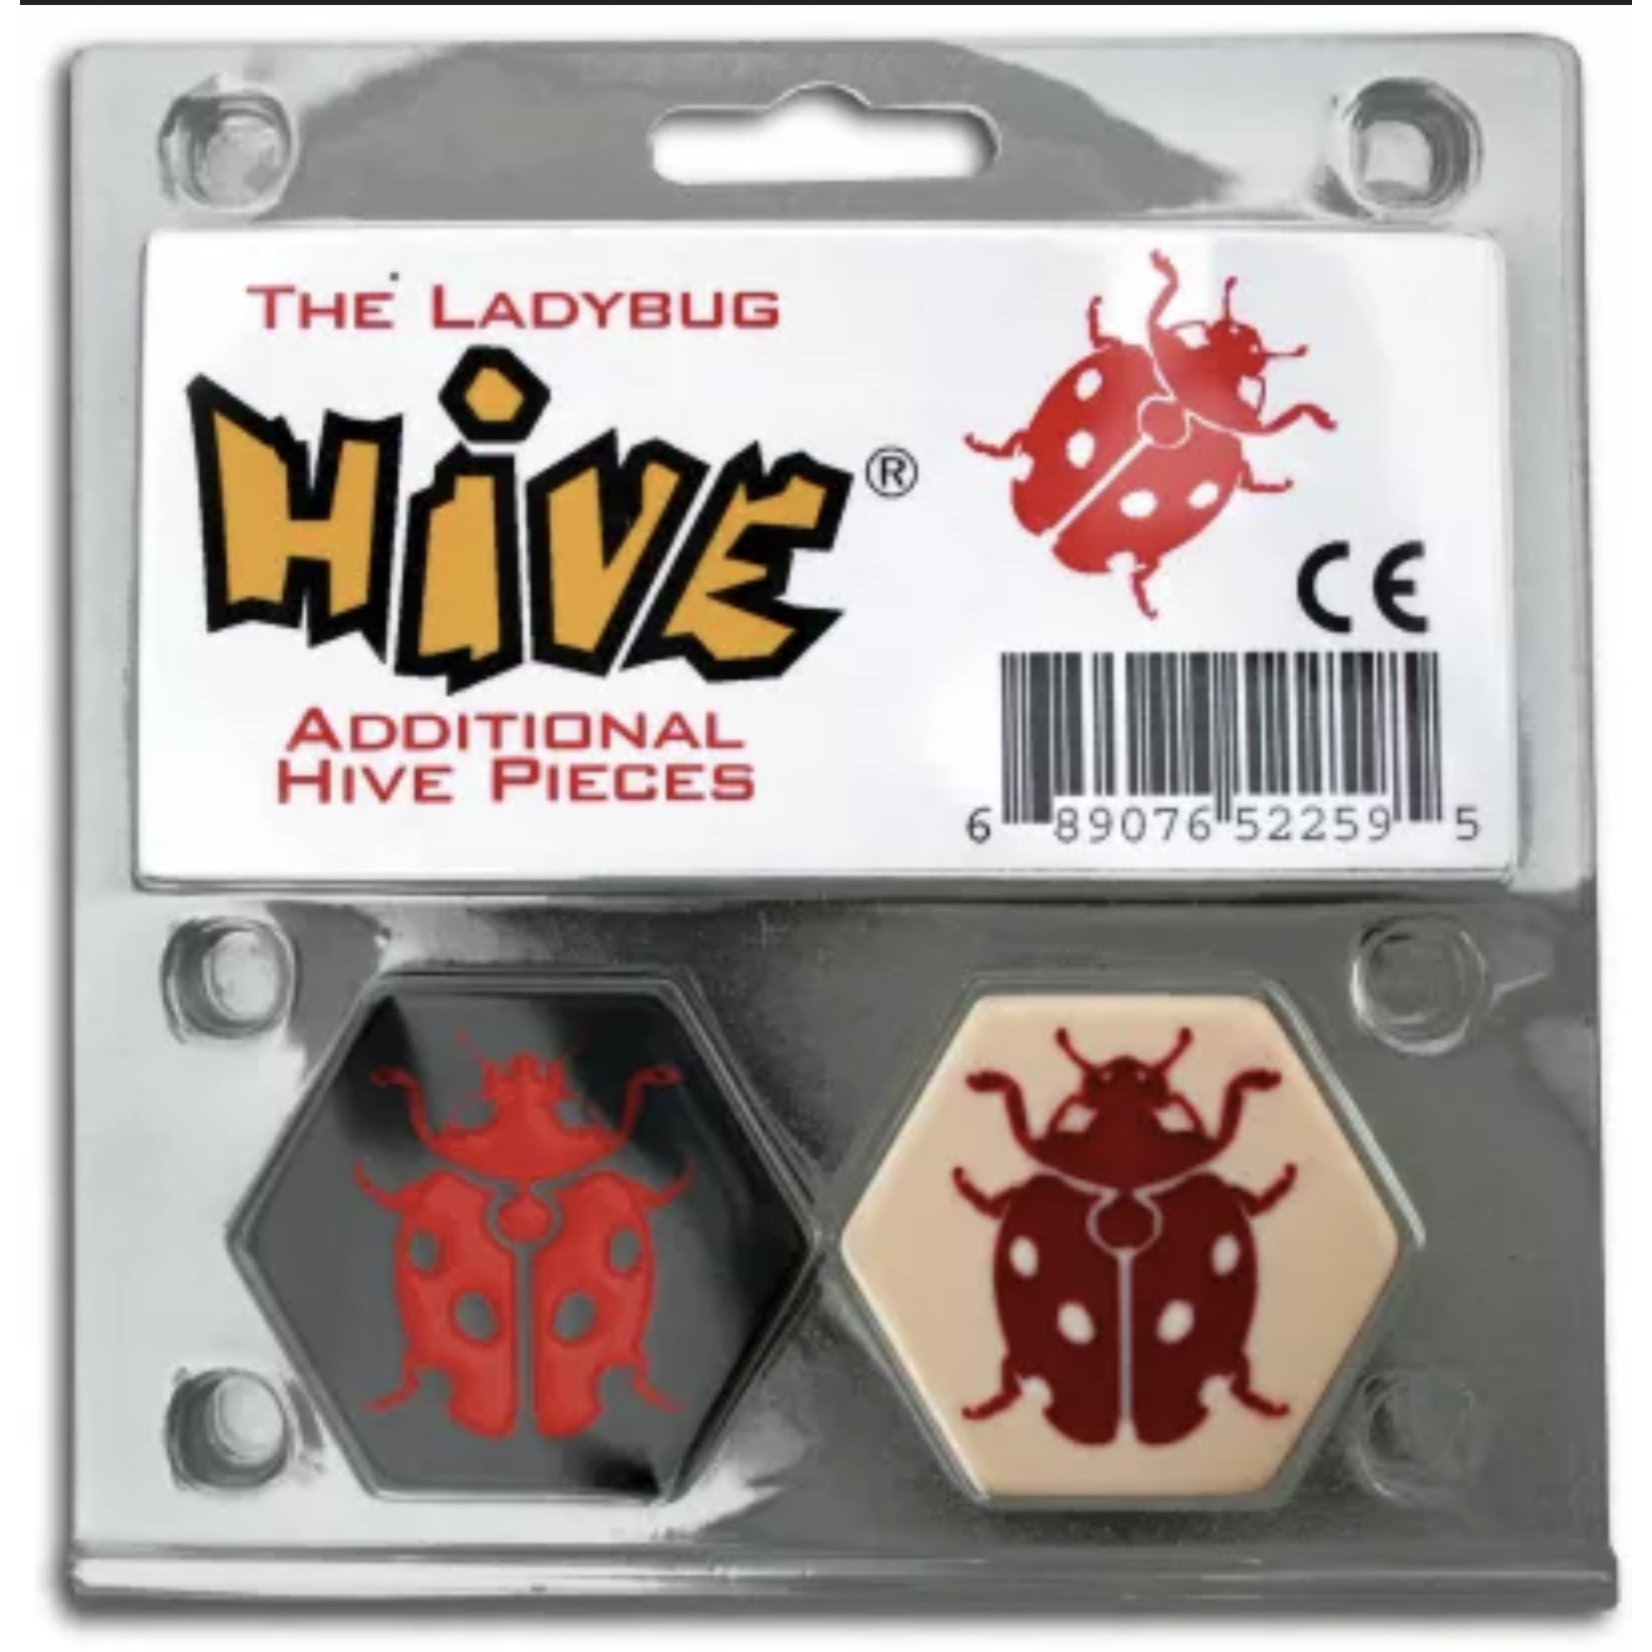 Team Components Hive: Ladybug